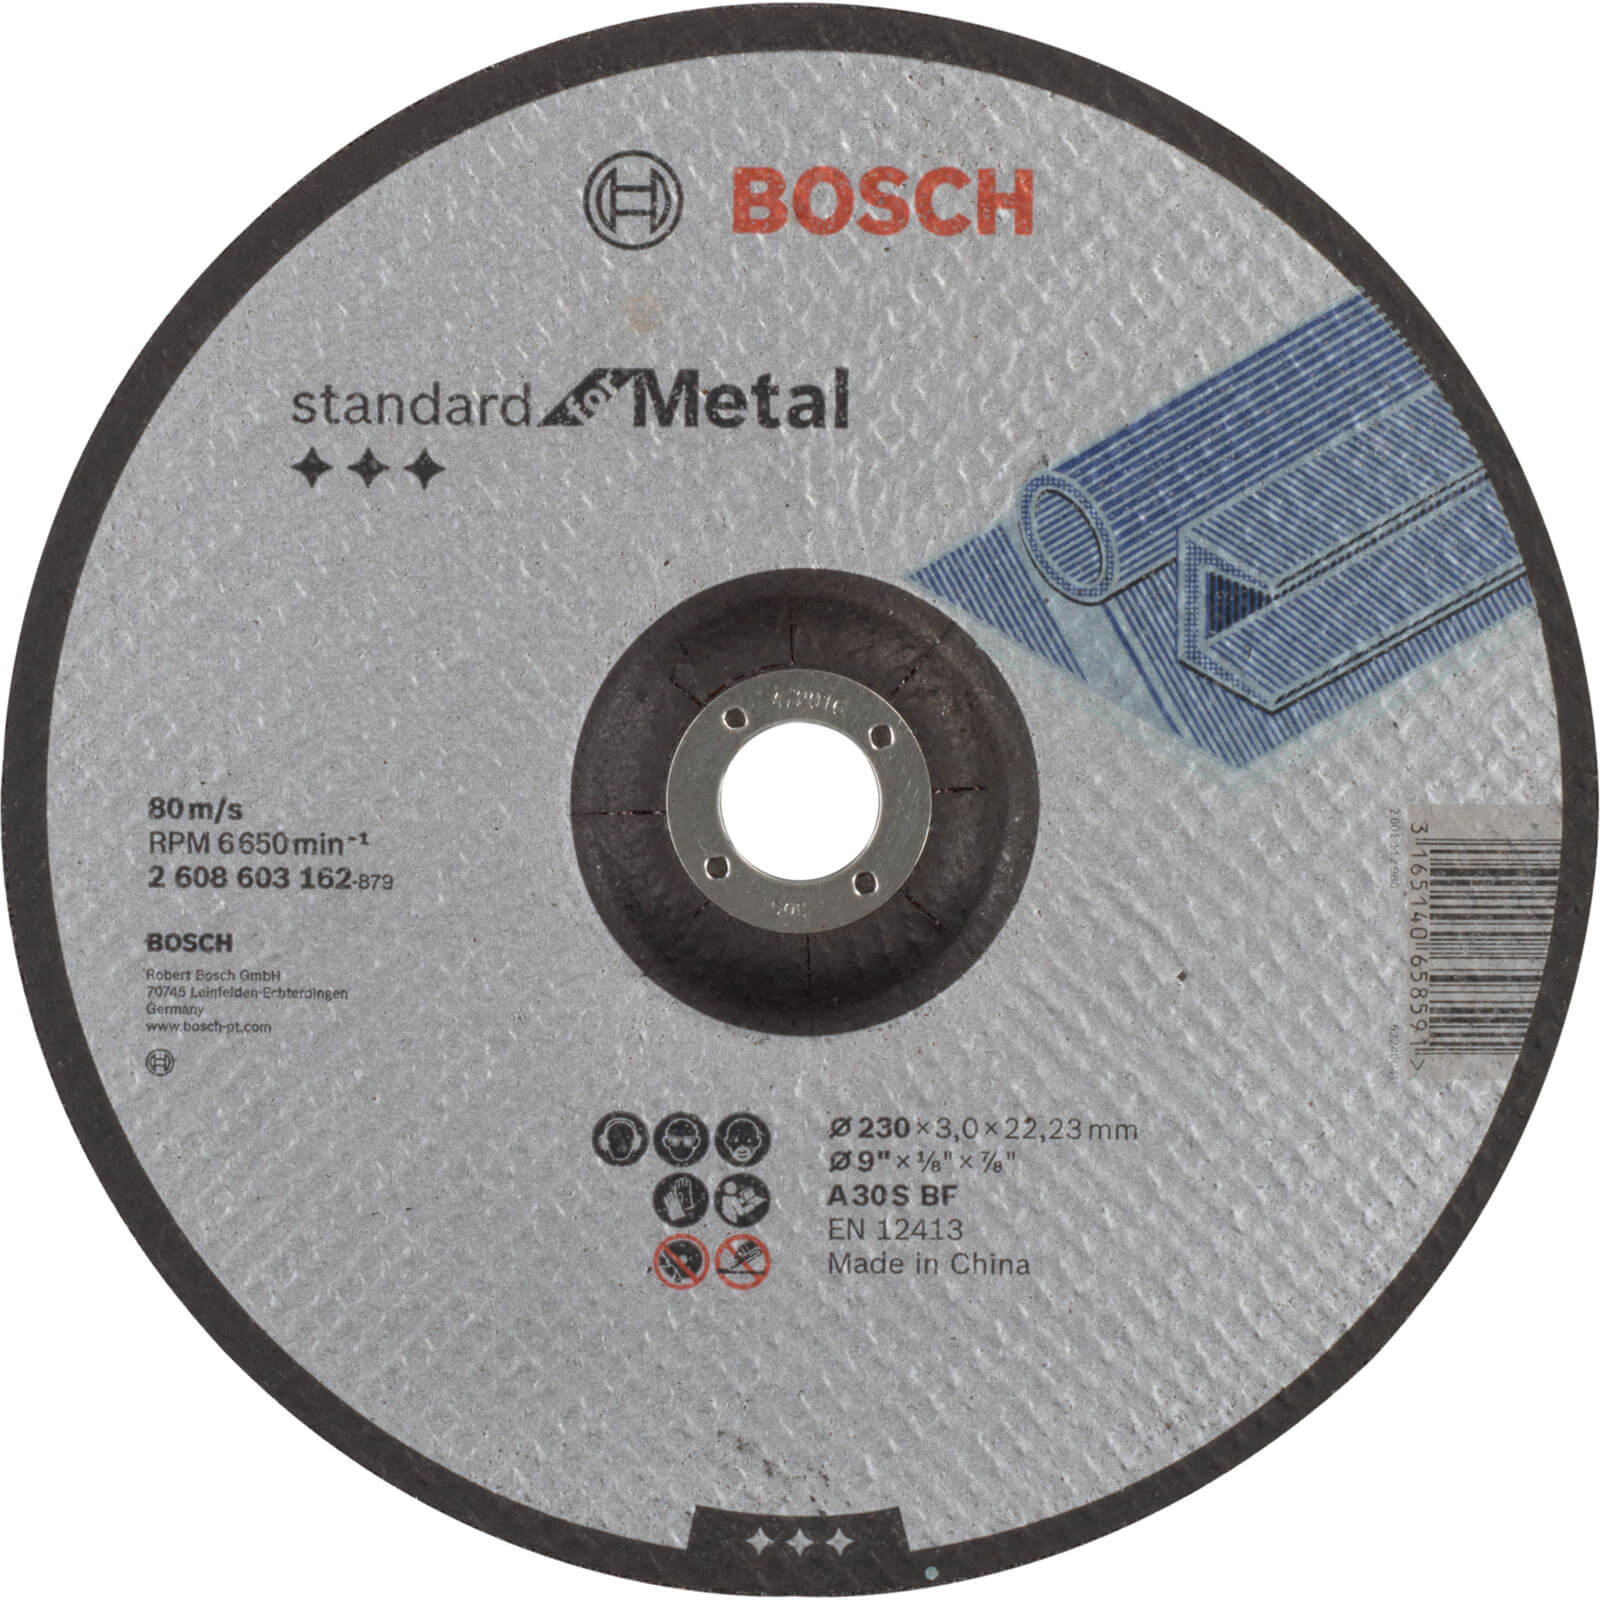 Bosch Standard Depressed Centre Metal Cutting Disc 230mm 3mm 22mm